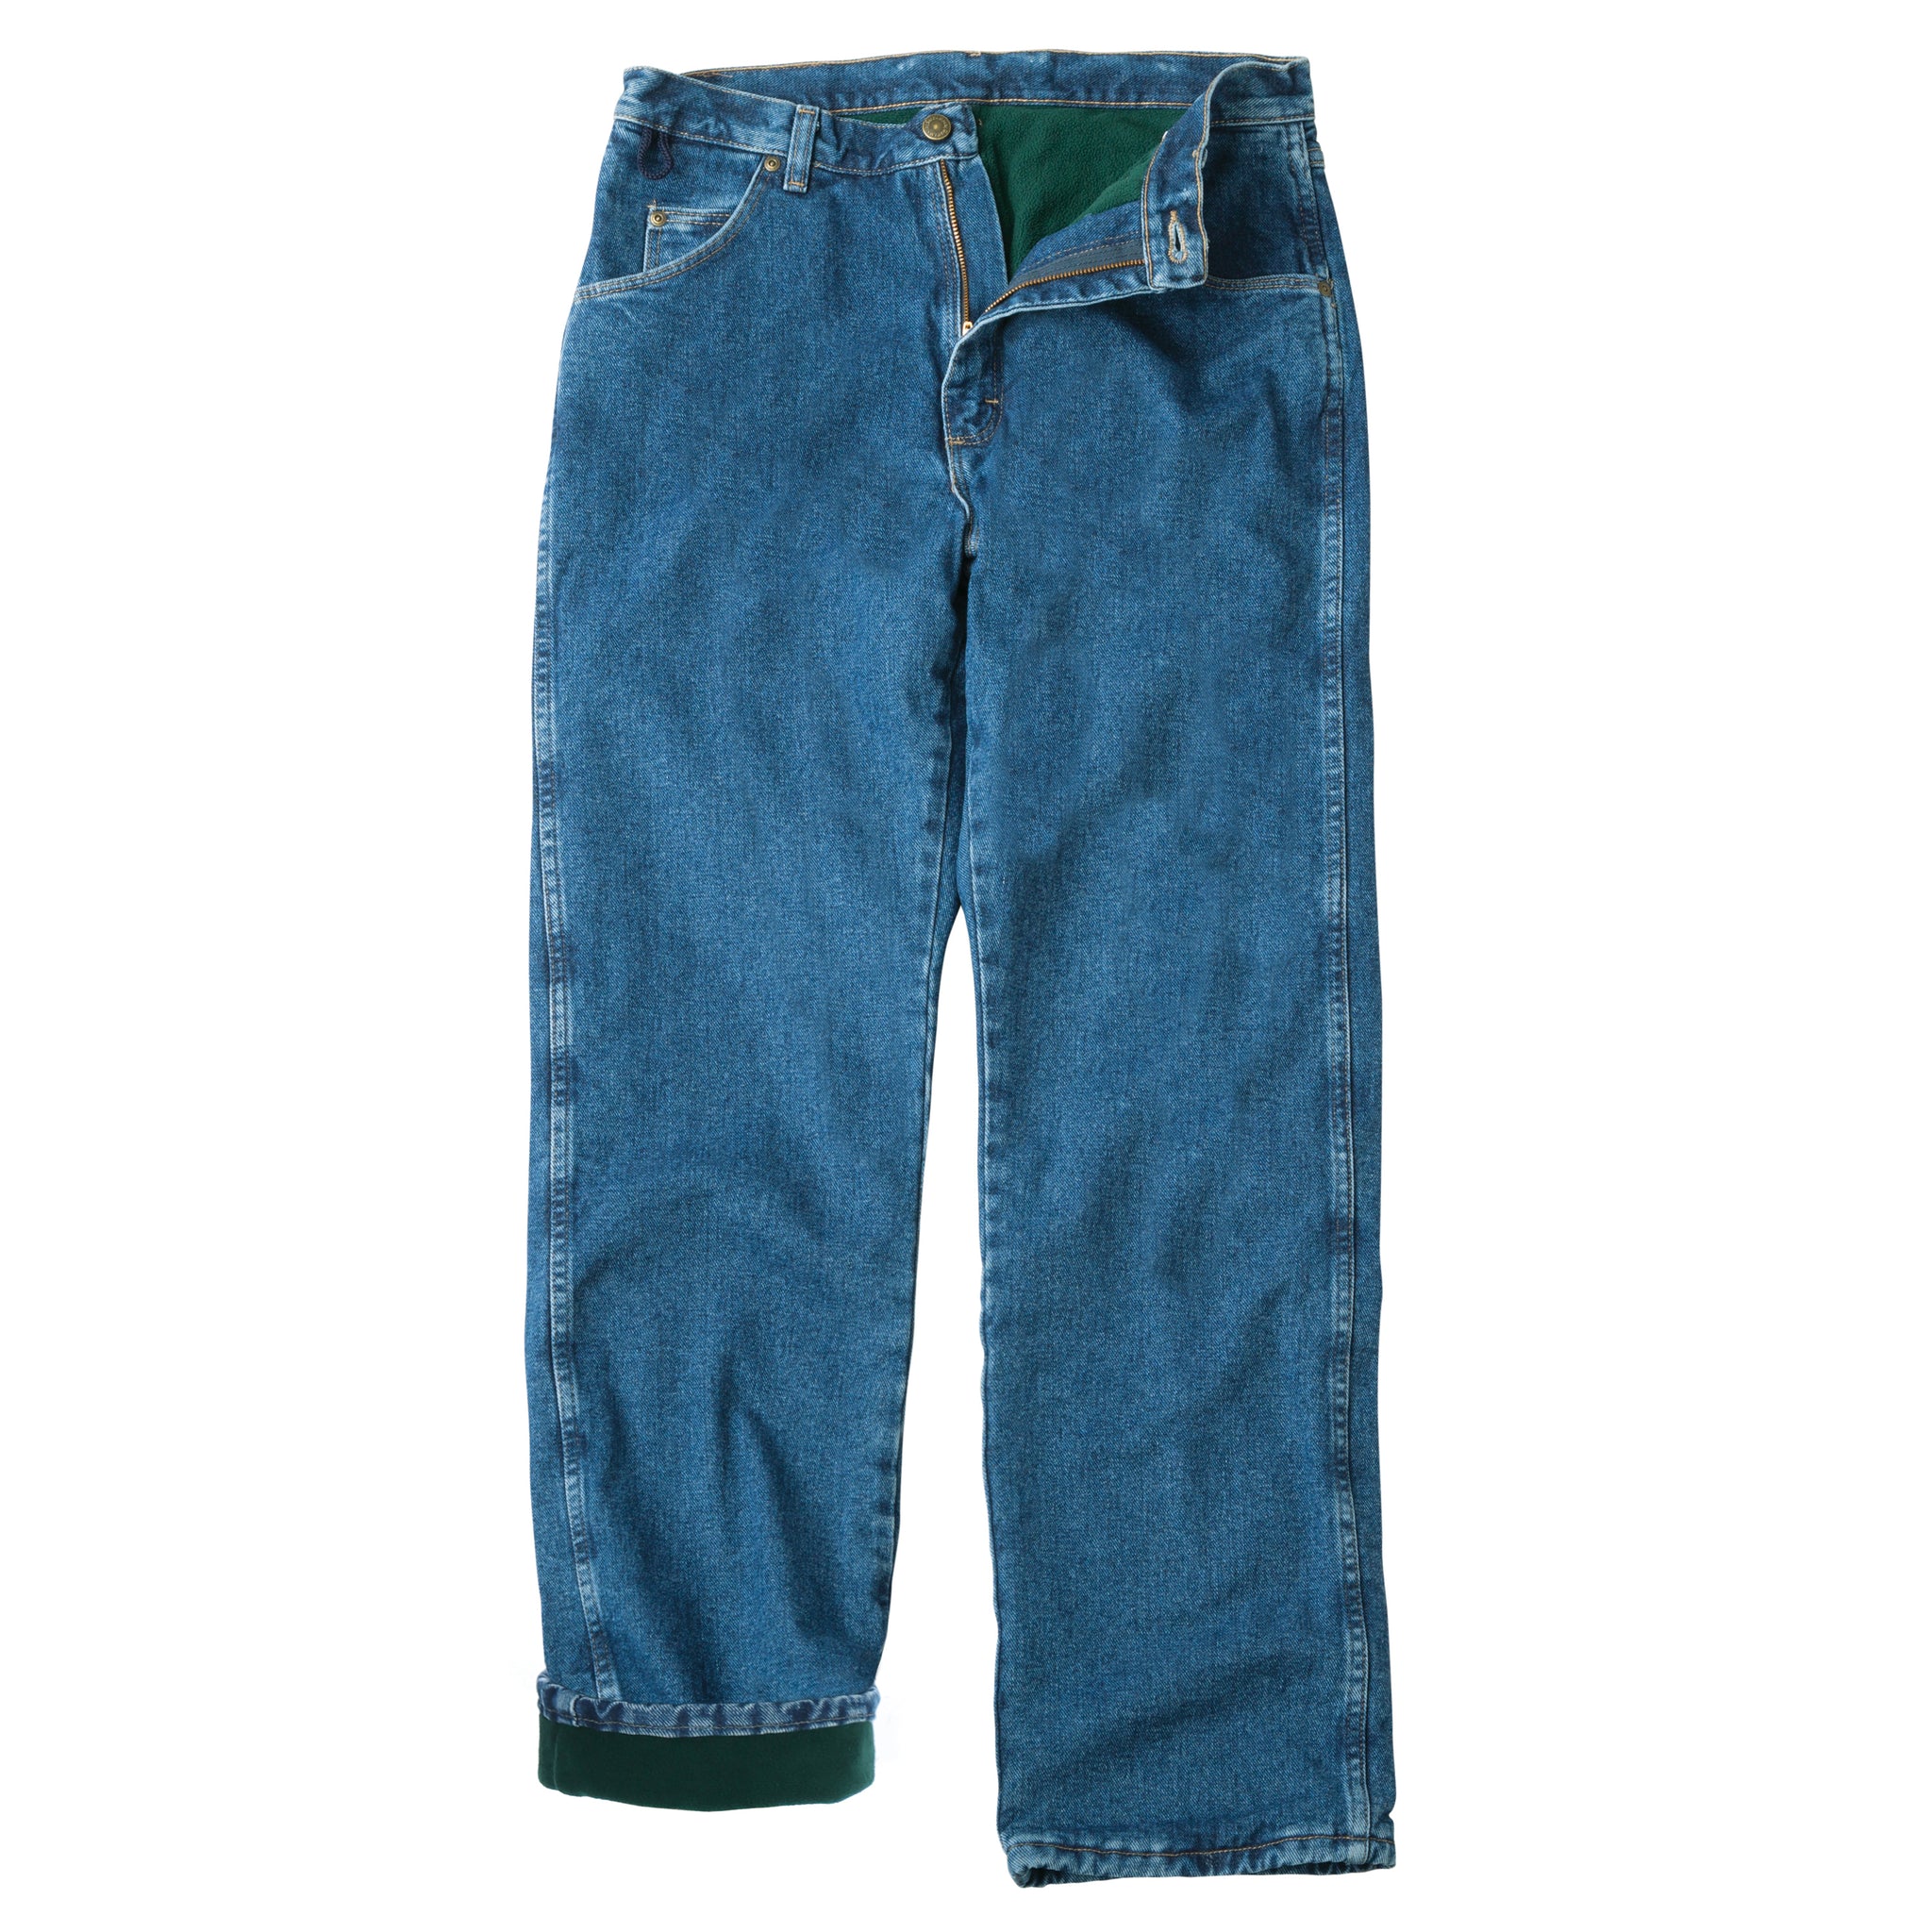 Wrangler Men's Rugged Wear Fleeced Lined Jeans 35002 – Good's